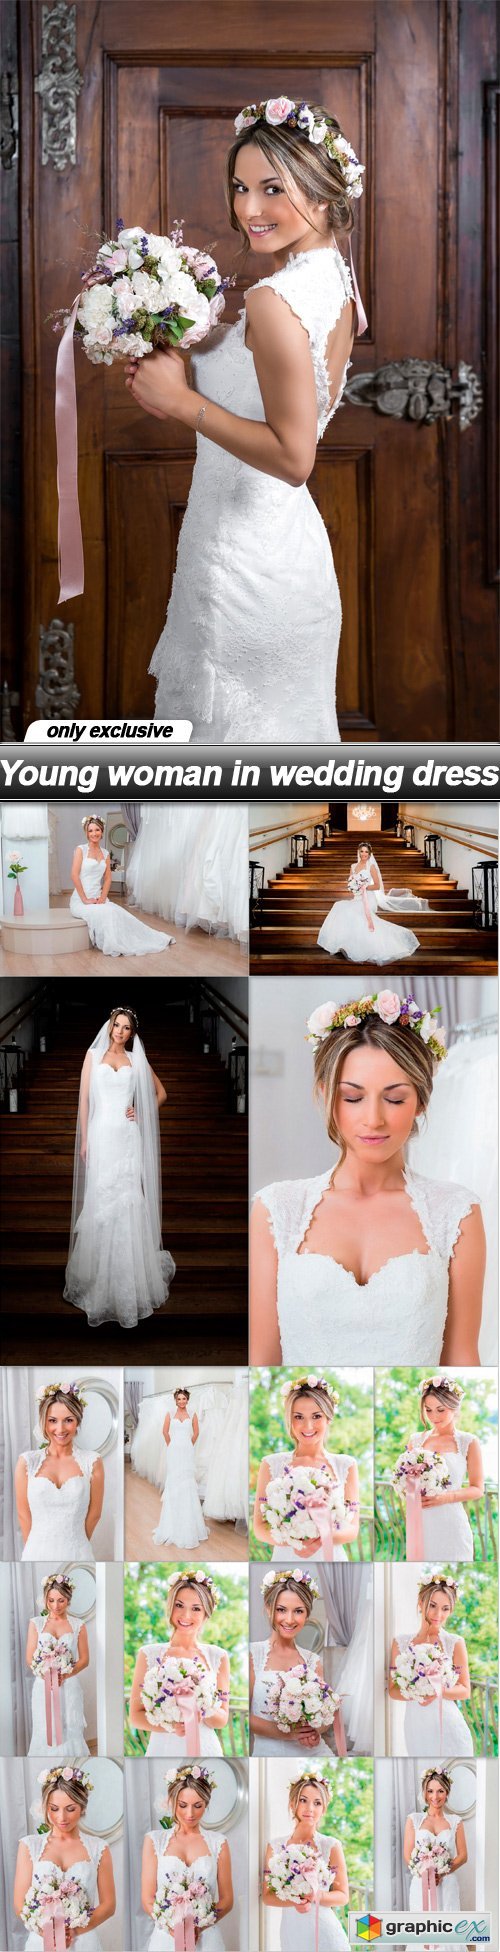 Young woman in wedding dress - 17 UHQ JPEG